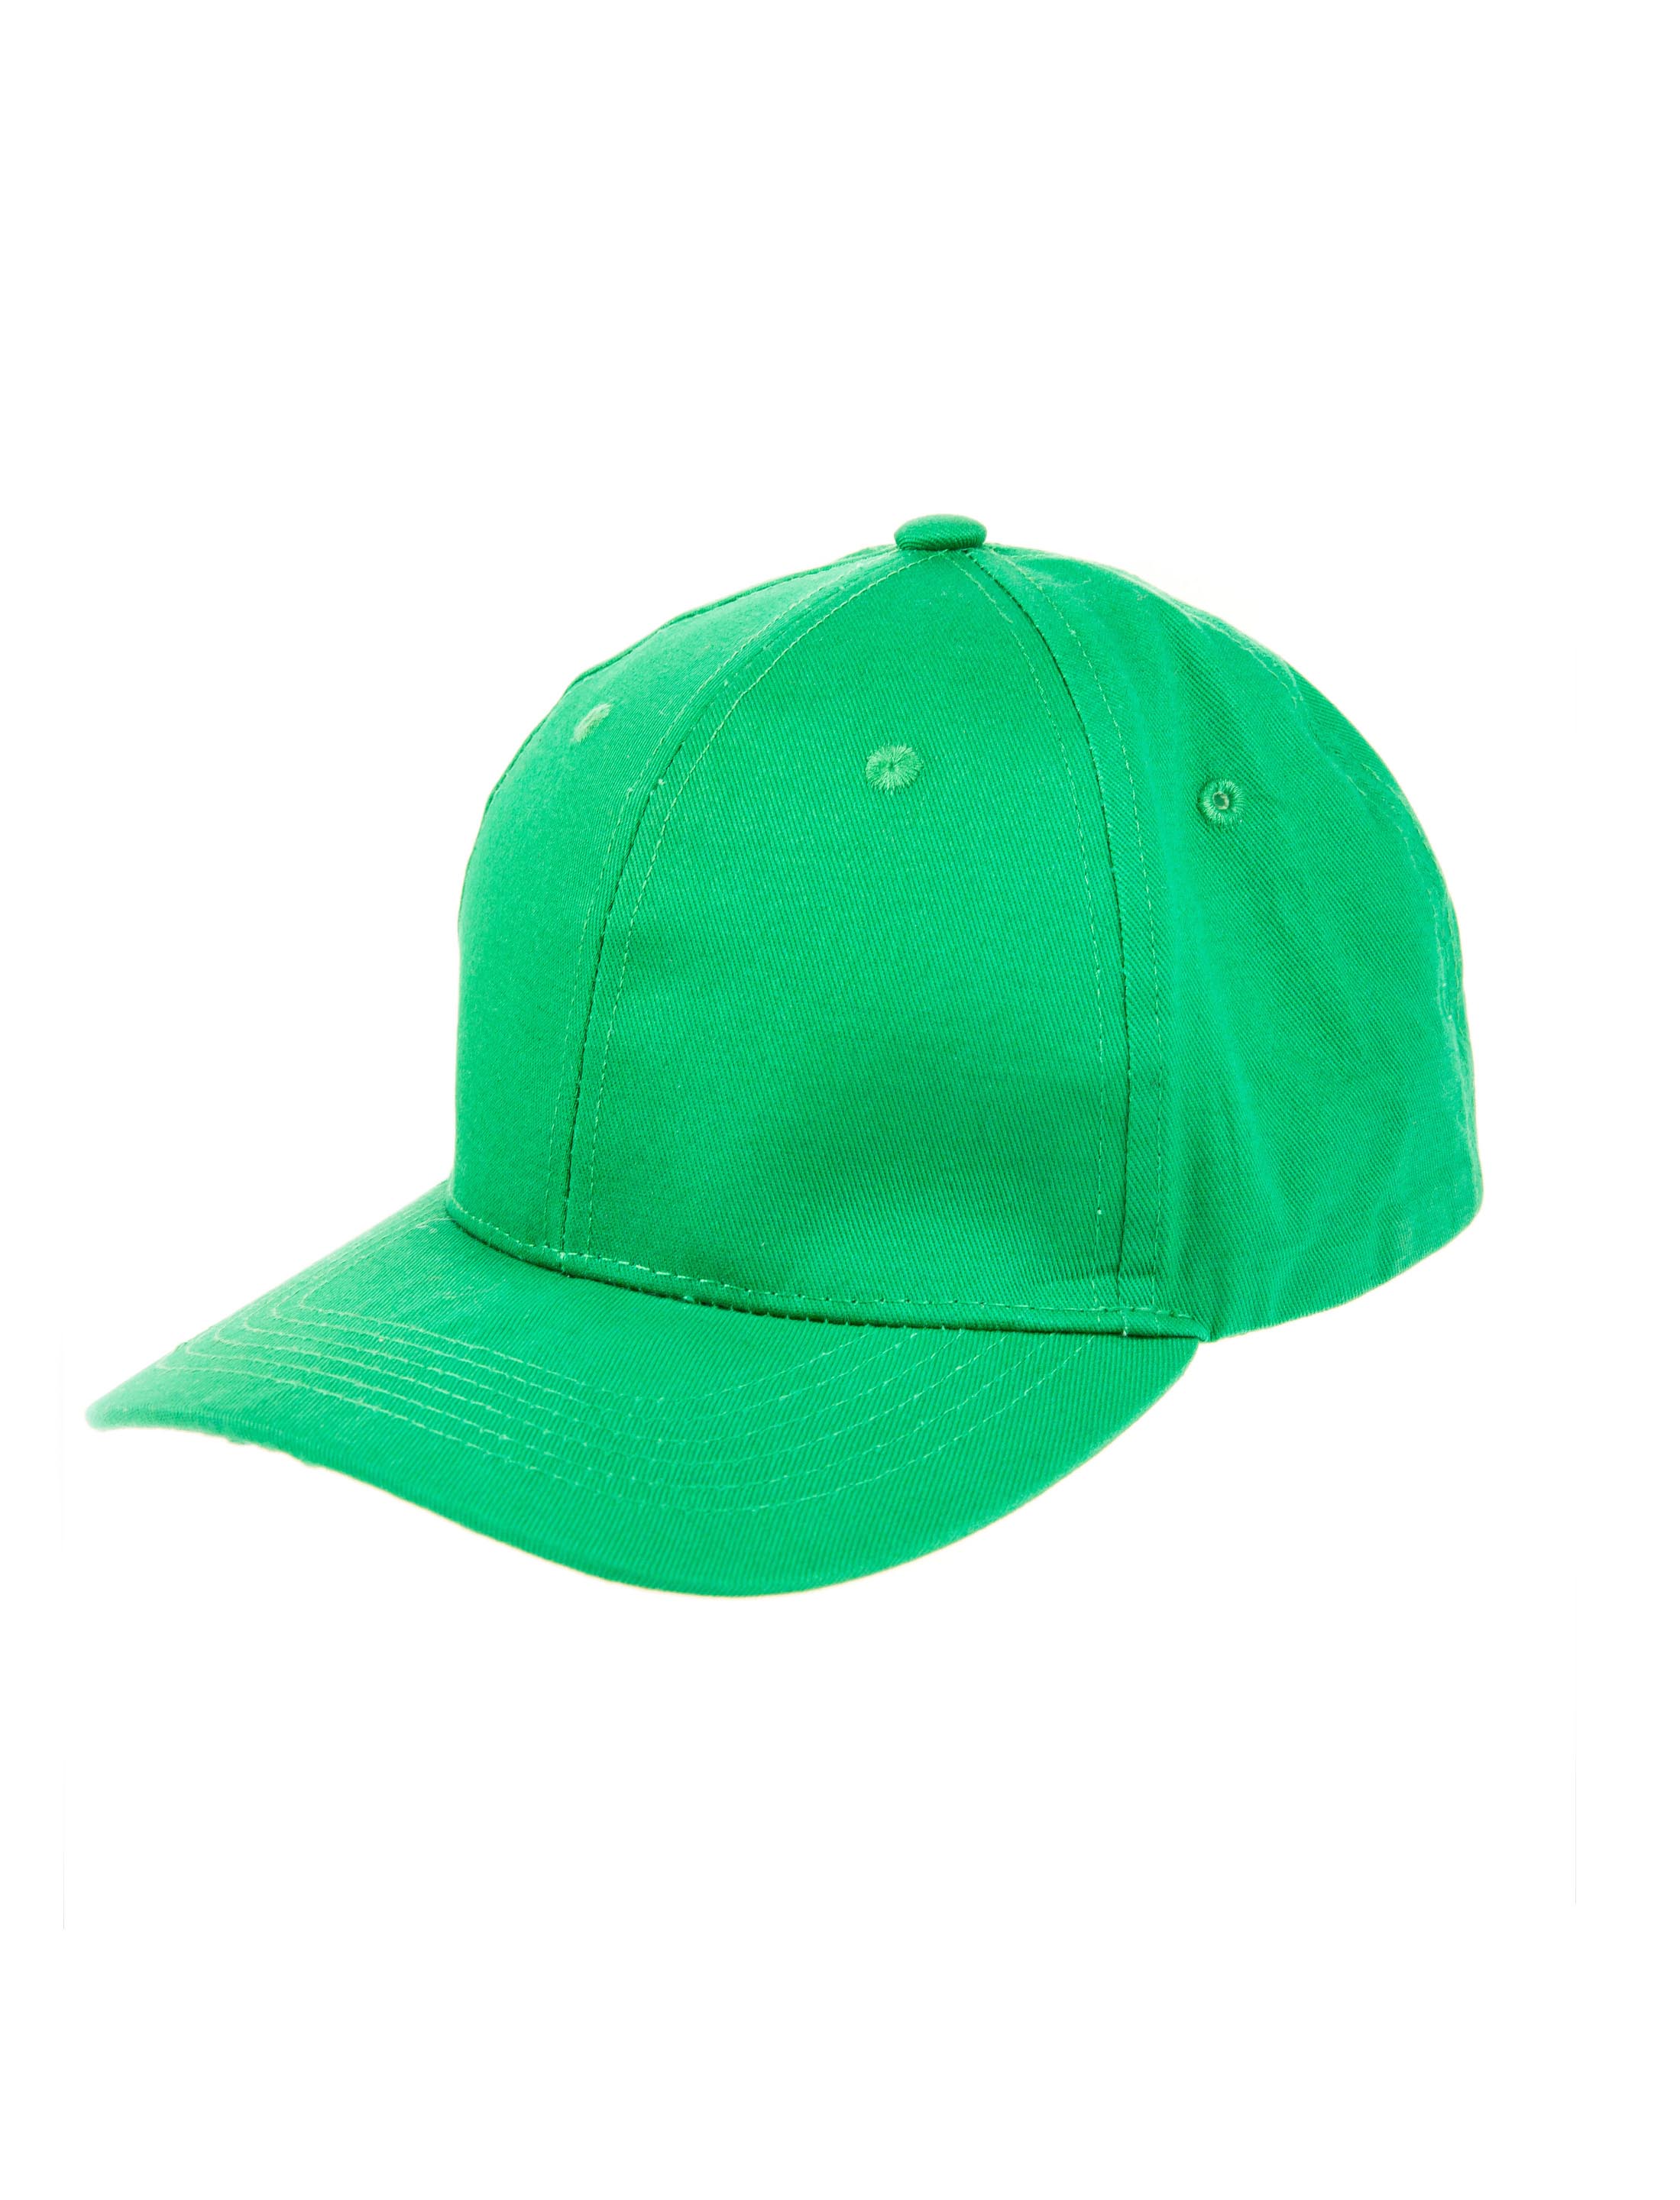 Baseball Cap grün one size